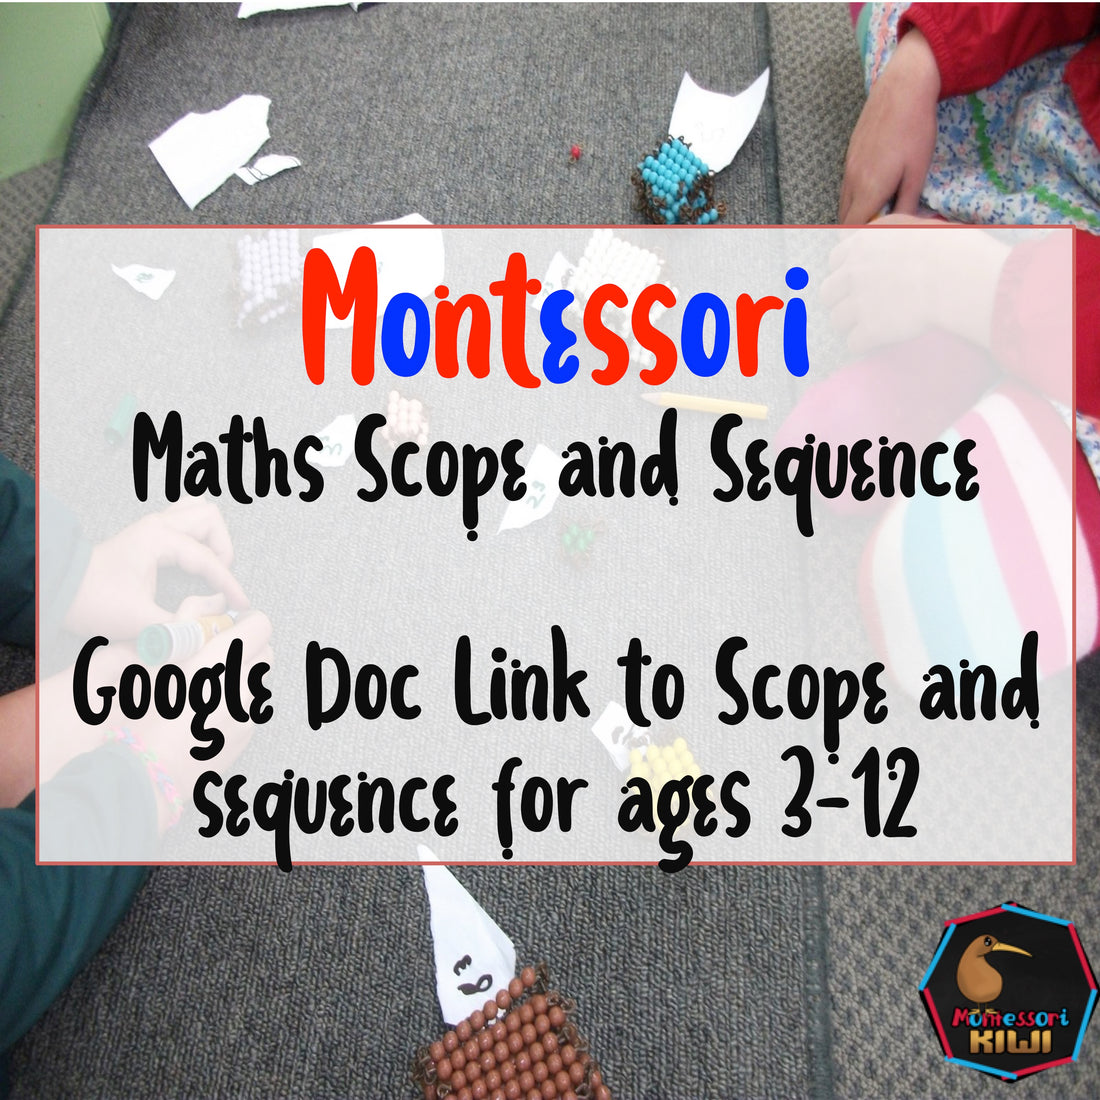 Montessori Math Scope and Sequence